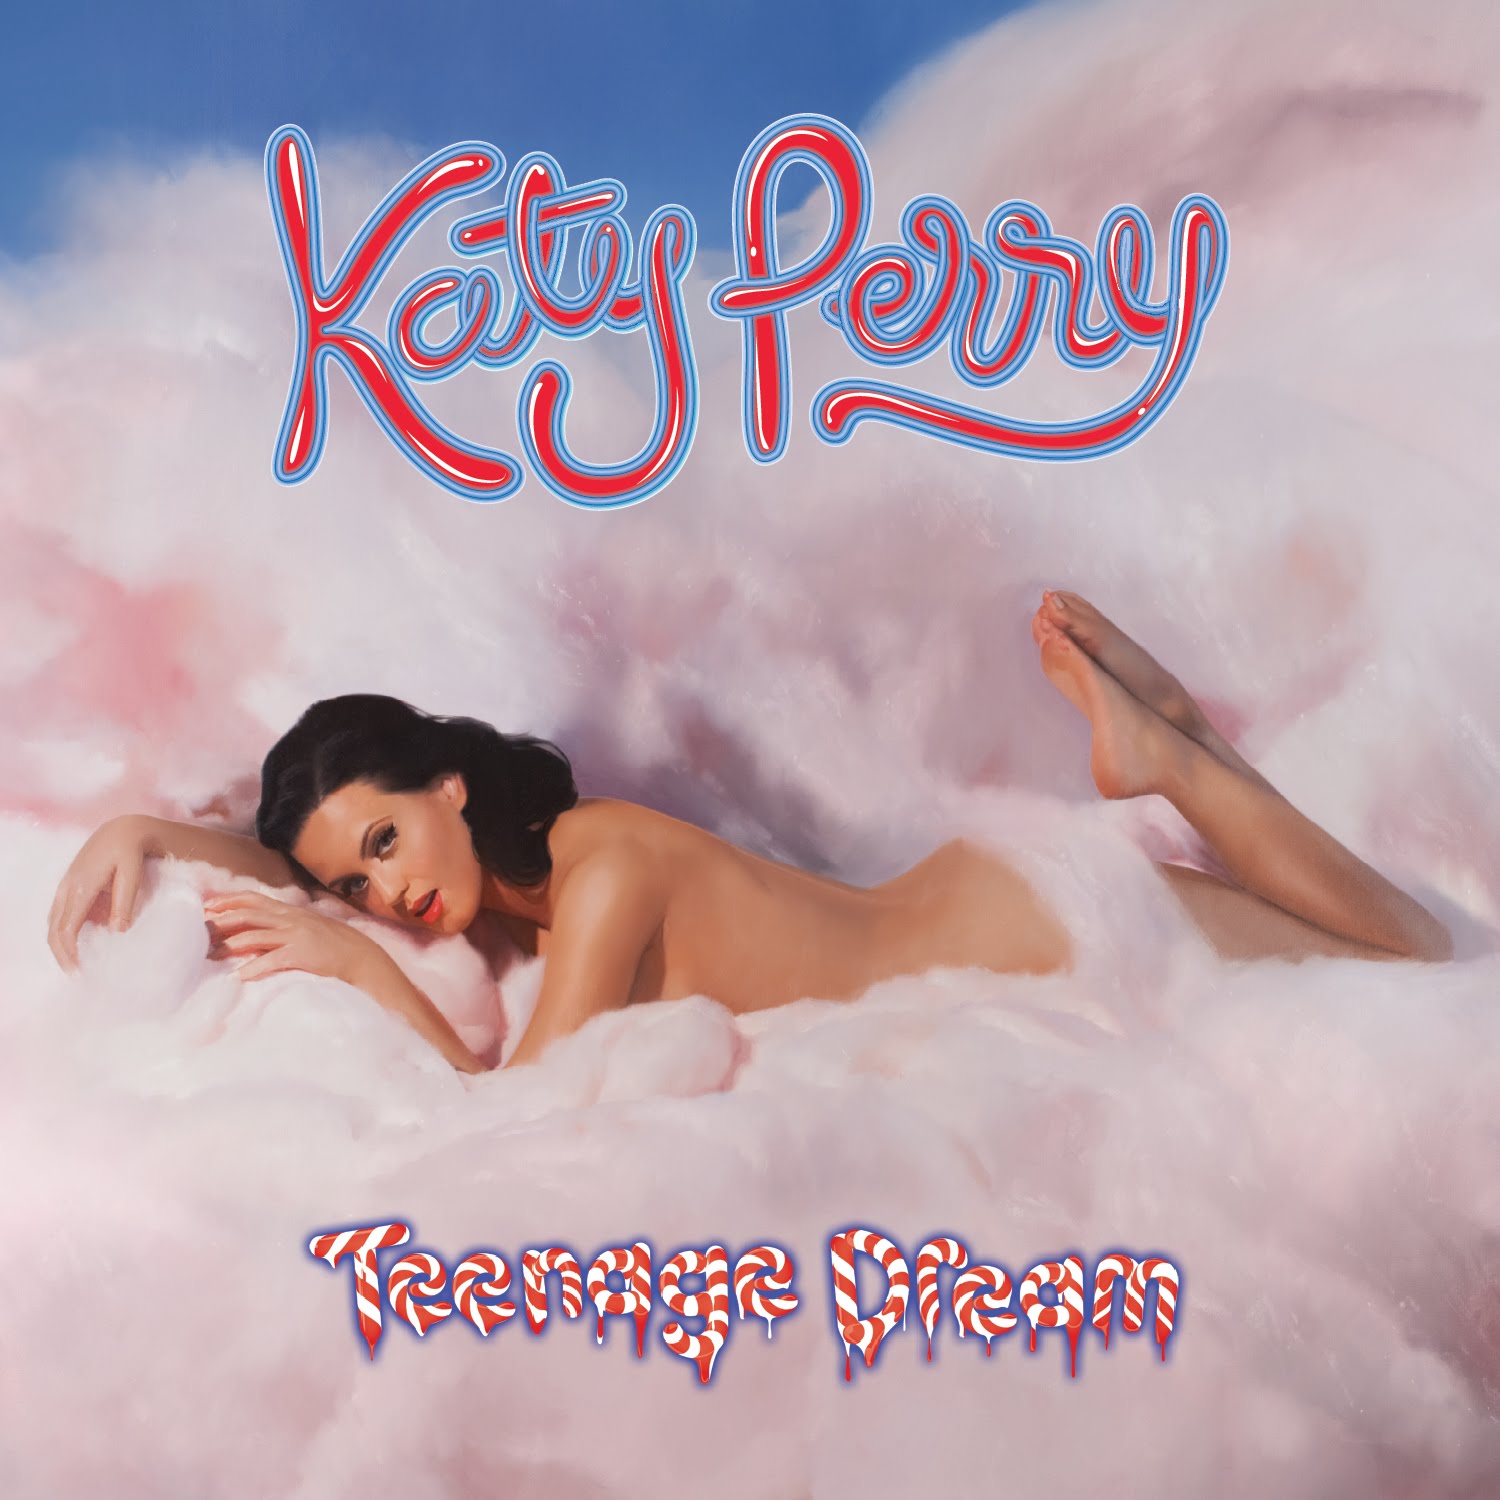 http://1.bp.blogspot.com/_9t7NcMzAq2U/TPvPljISsmI/AAAAAAAAAJE/OjFrW-7uPYY/s1600/Katy-Perry-Teenage-Dream-Official-Album-Cover-Deutsch-Edition.jpg